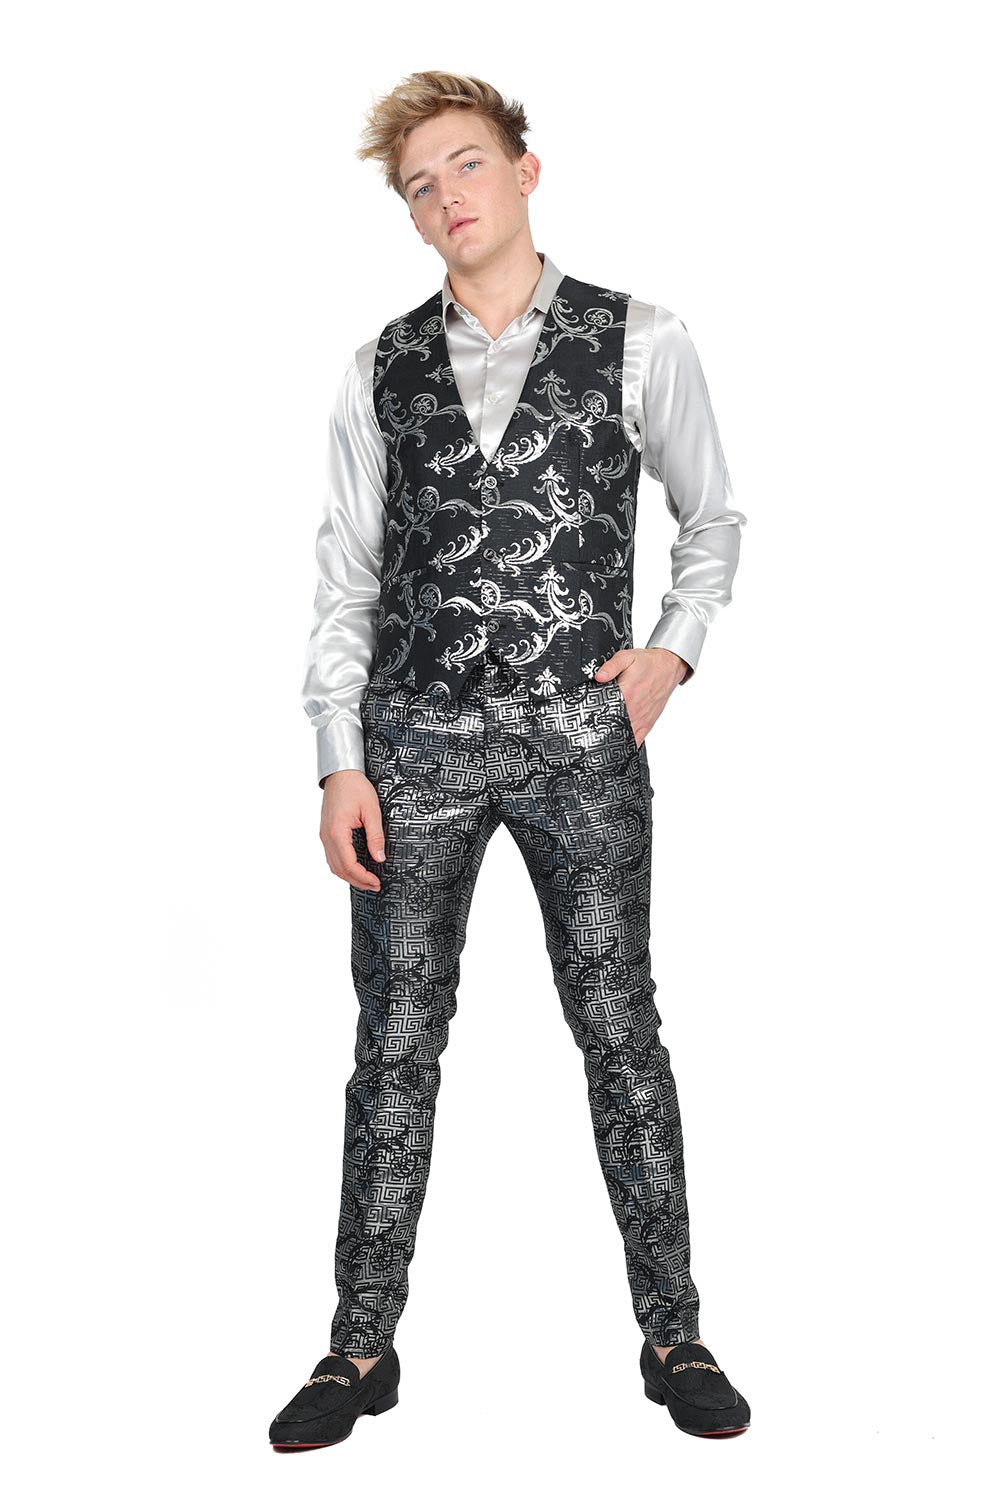 Barabas Men's Greek Key Pattern Floral Print Luxury Dress Vest 2VP3102 Black Silver